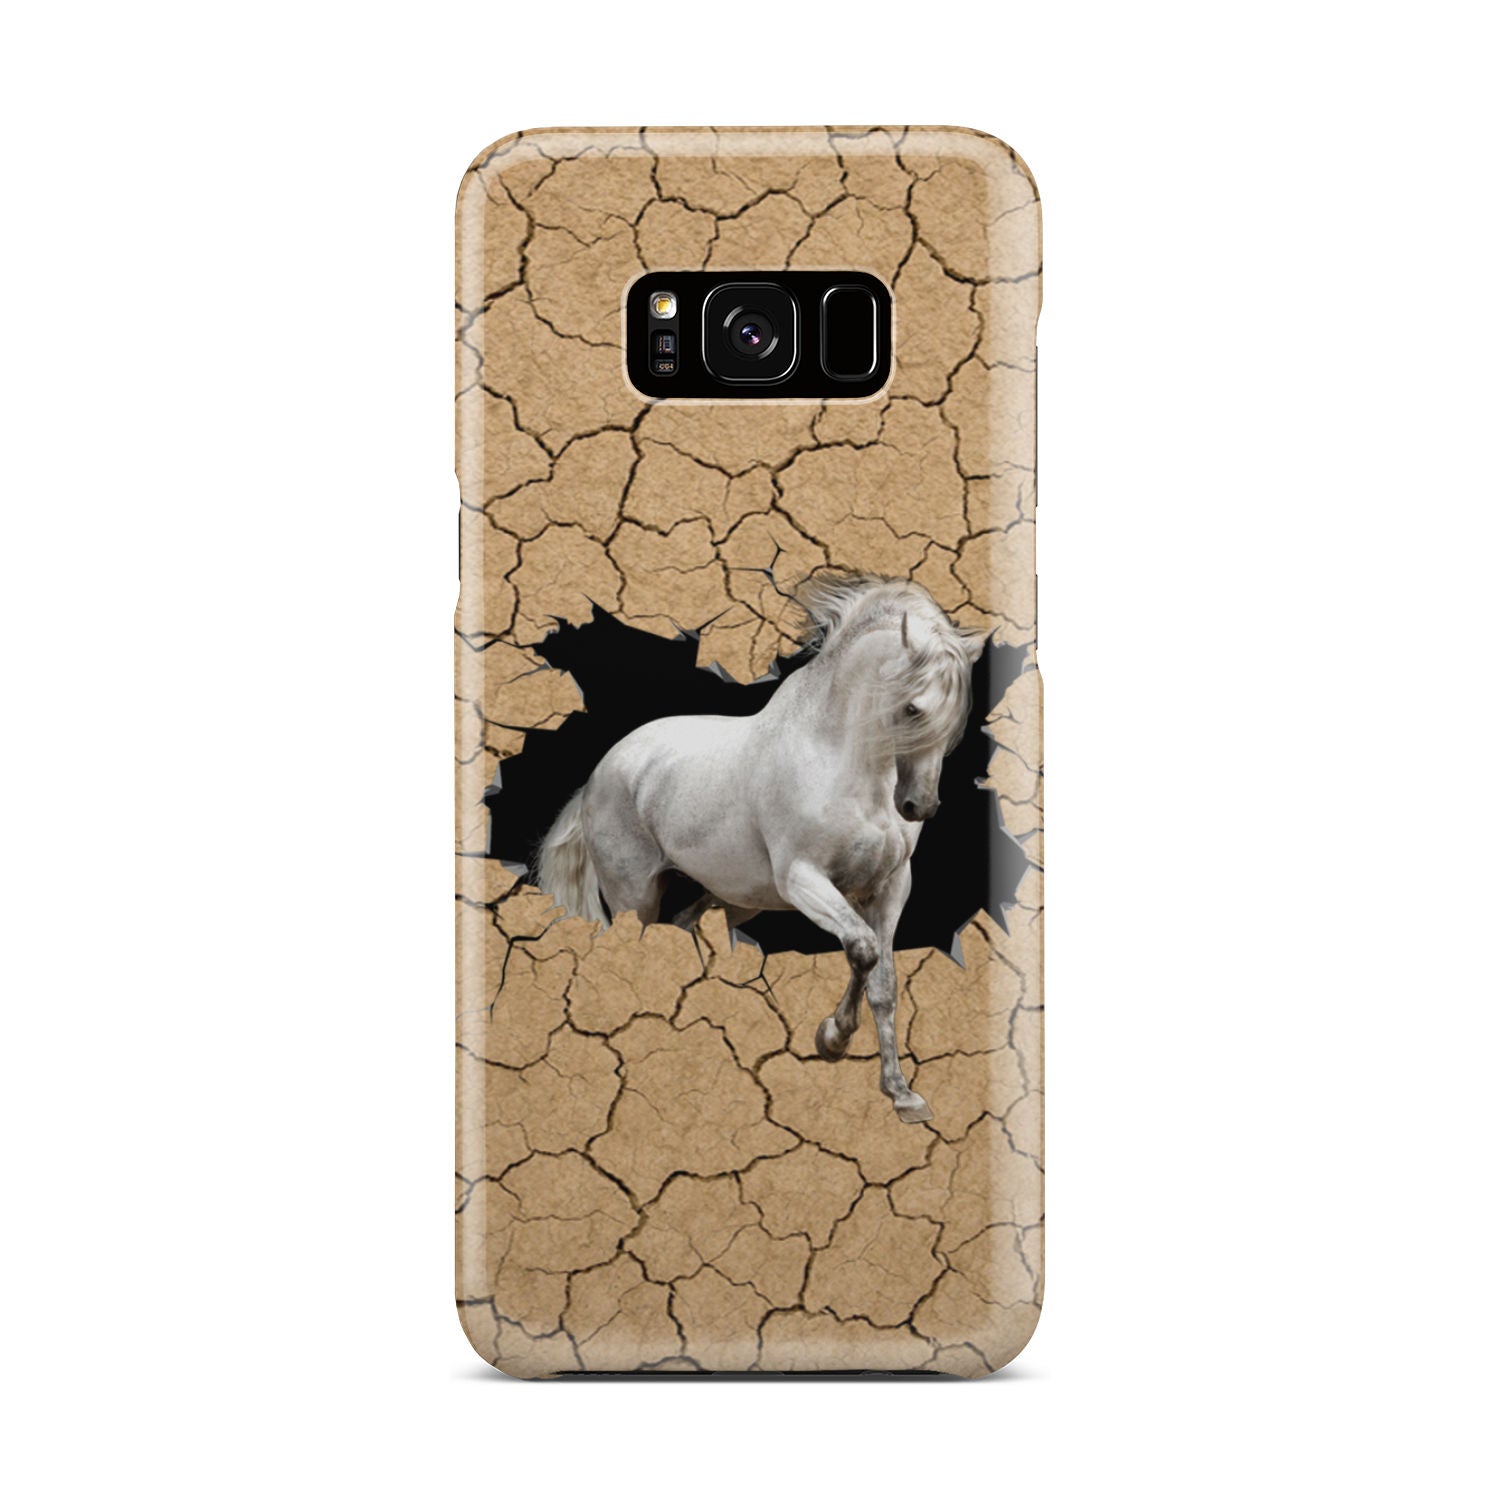 Powwow Store gb nat00503 03 white horse native phone case